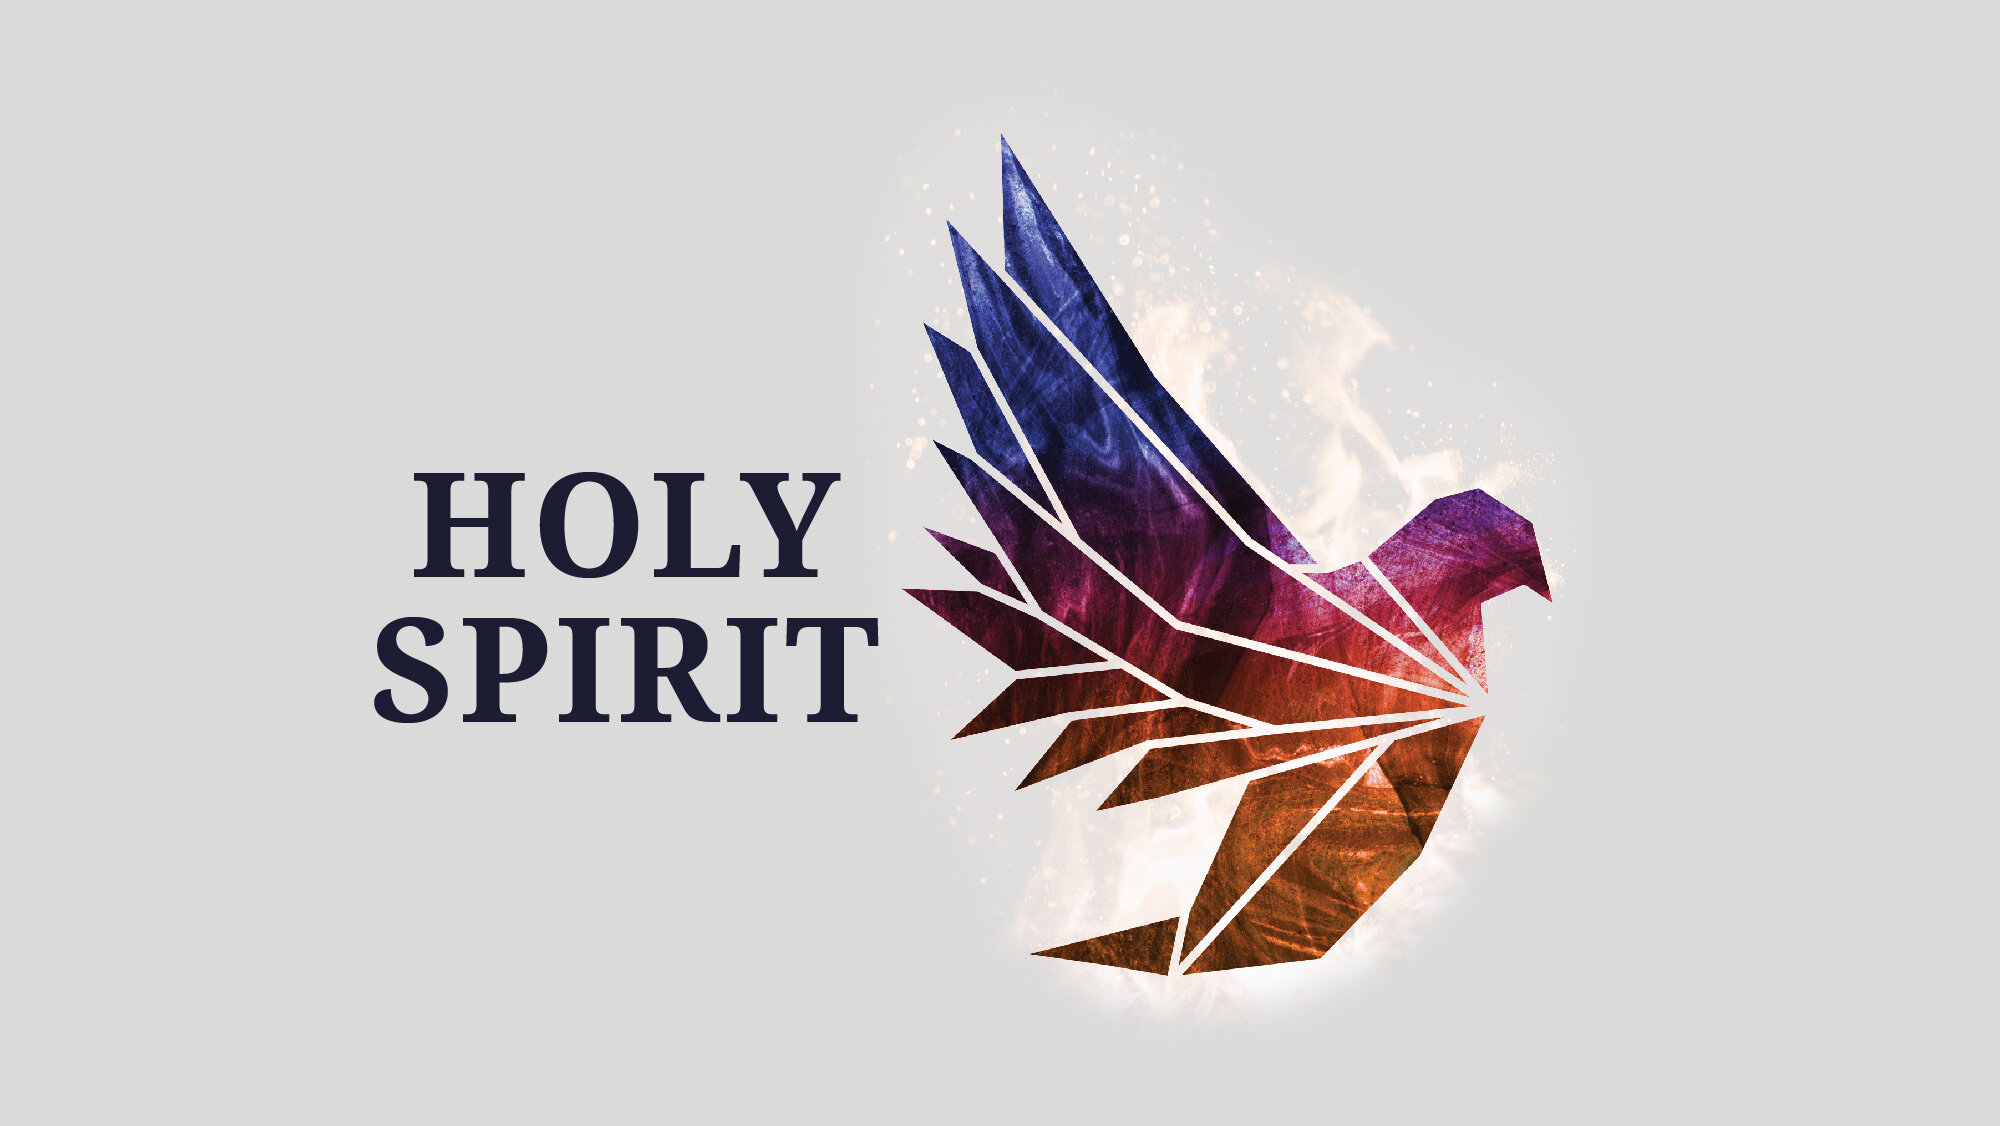 Holy Spirit website - Copy.jpg